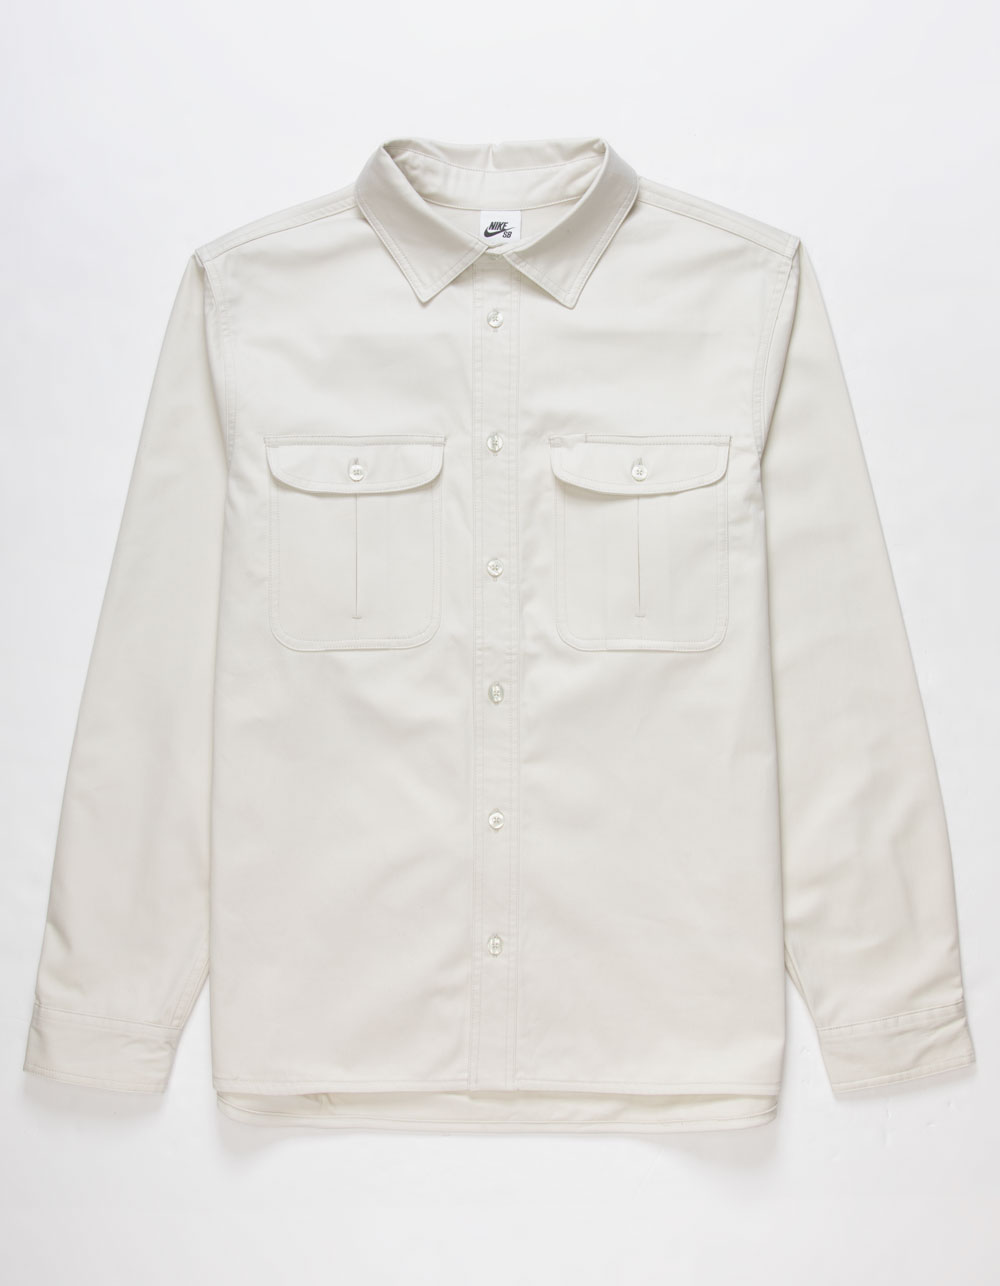 NIKE SB Tanglin Mens Button Up Long Sleeve Shirt